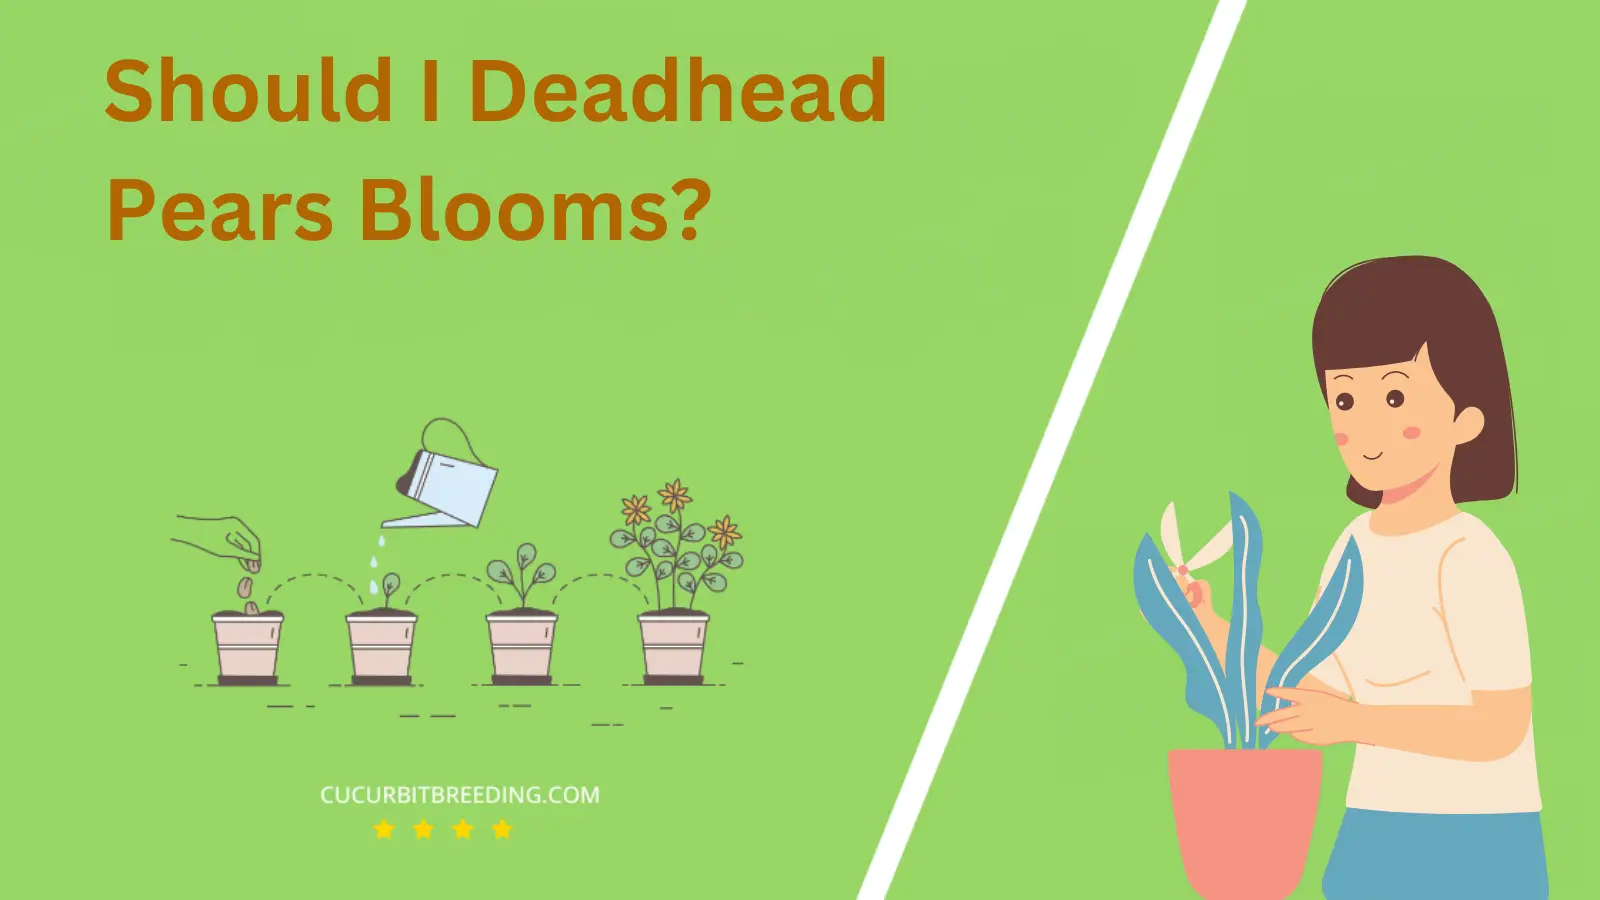 Should I Deadhead Pears Blooms?